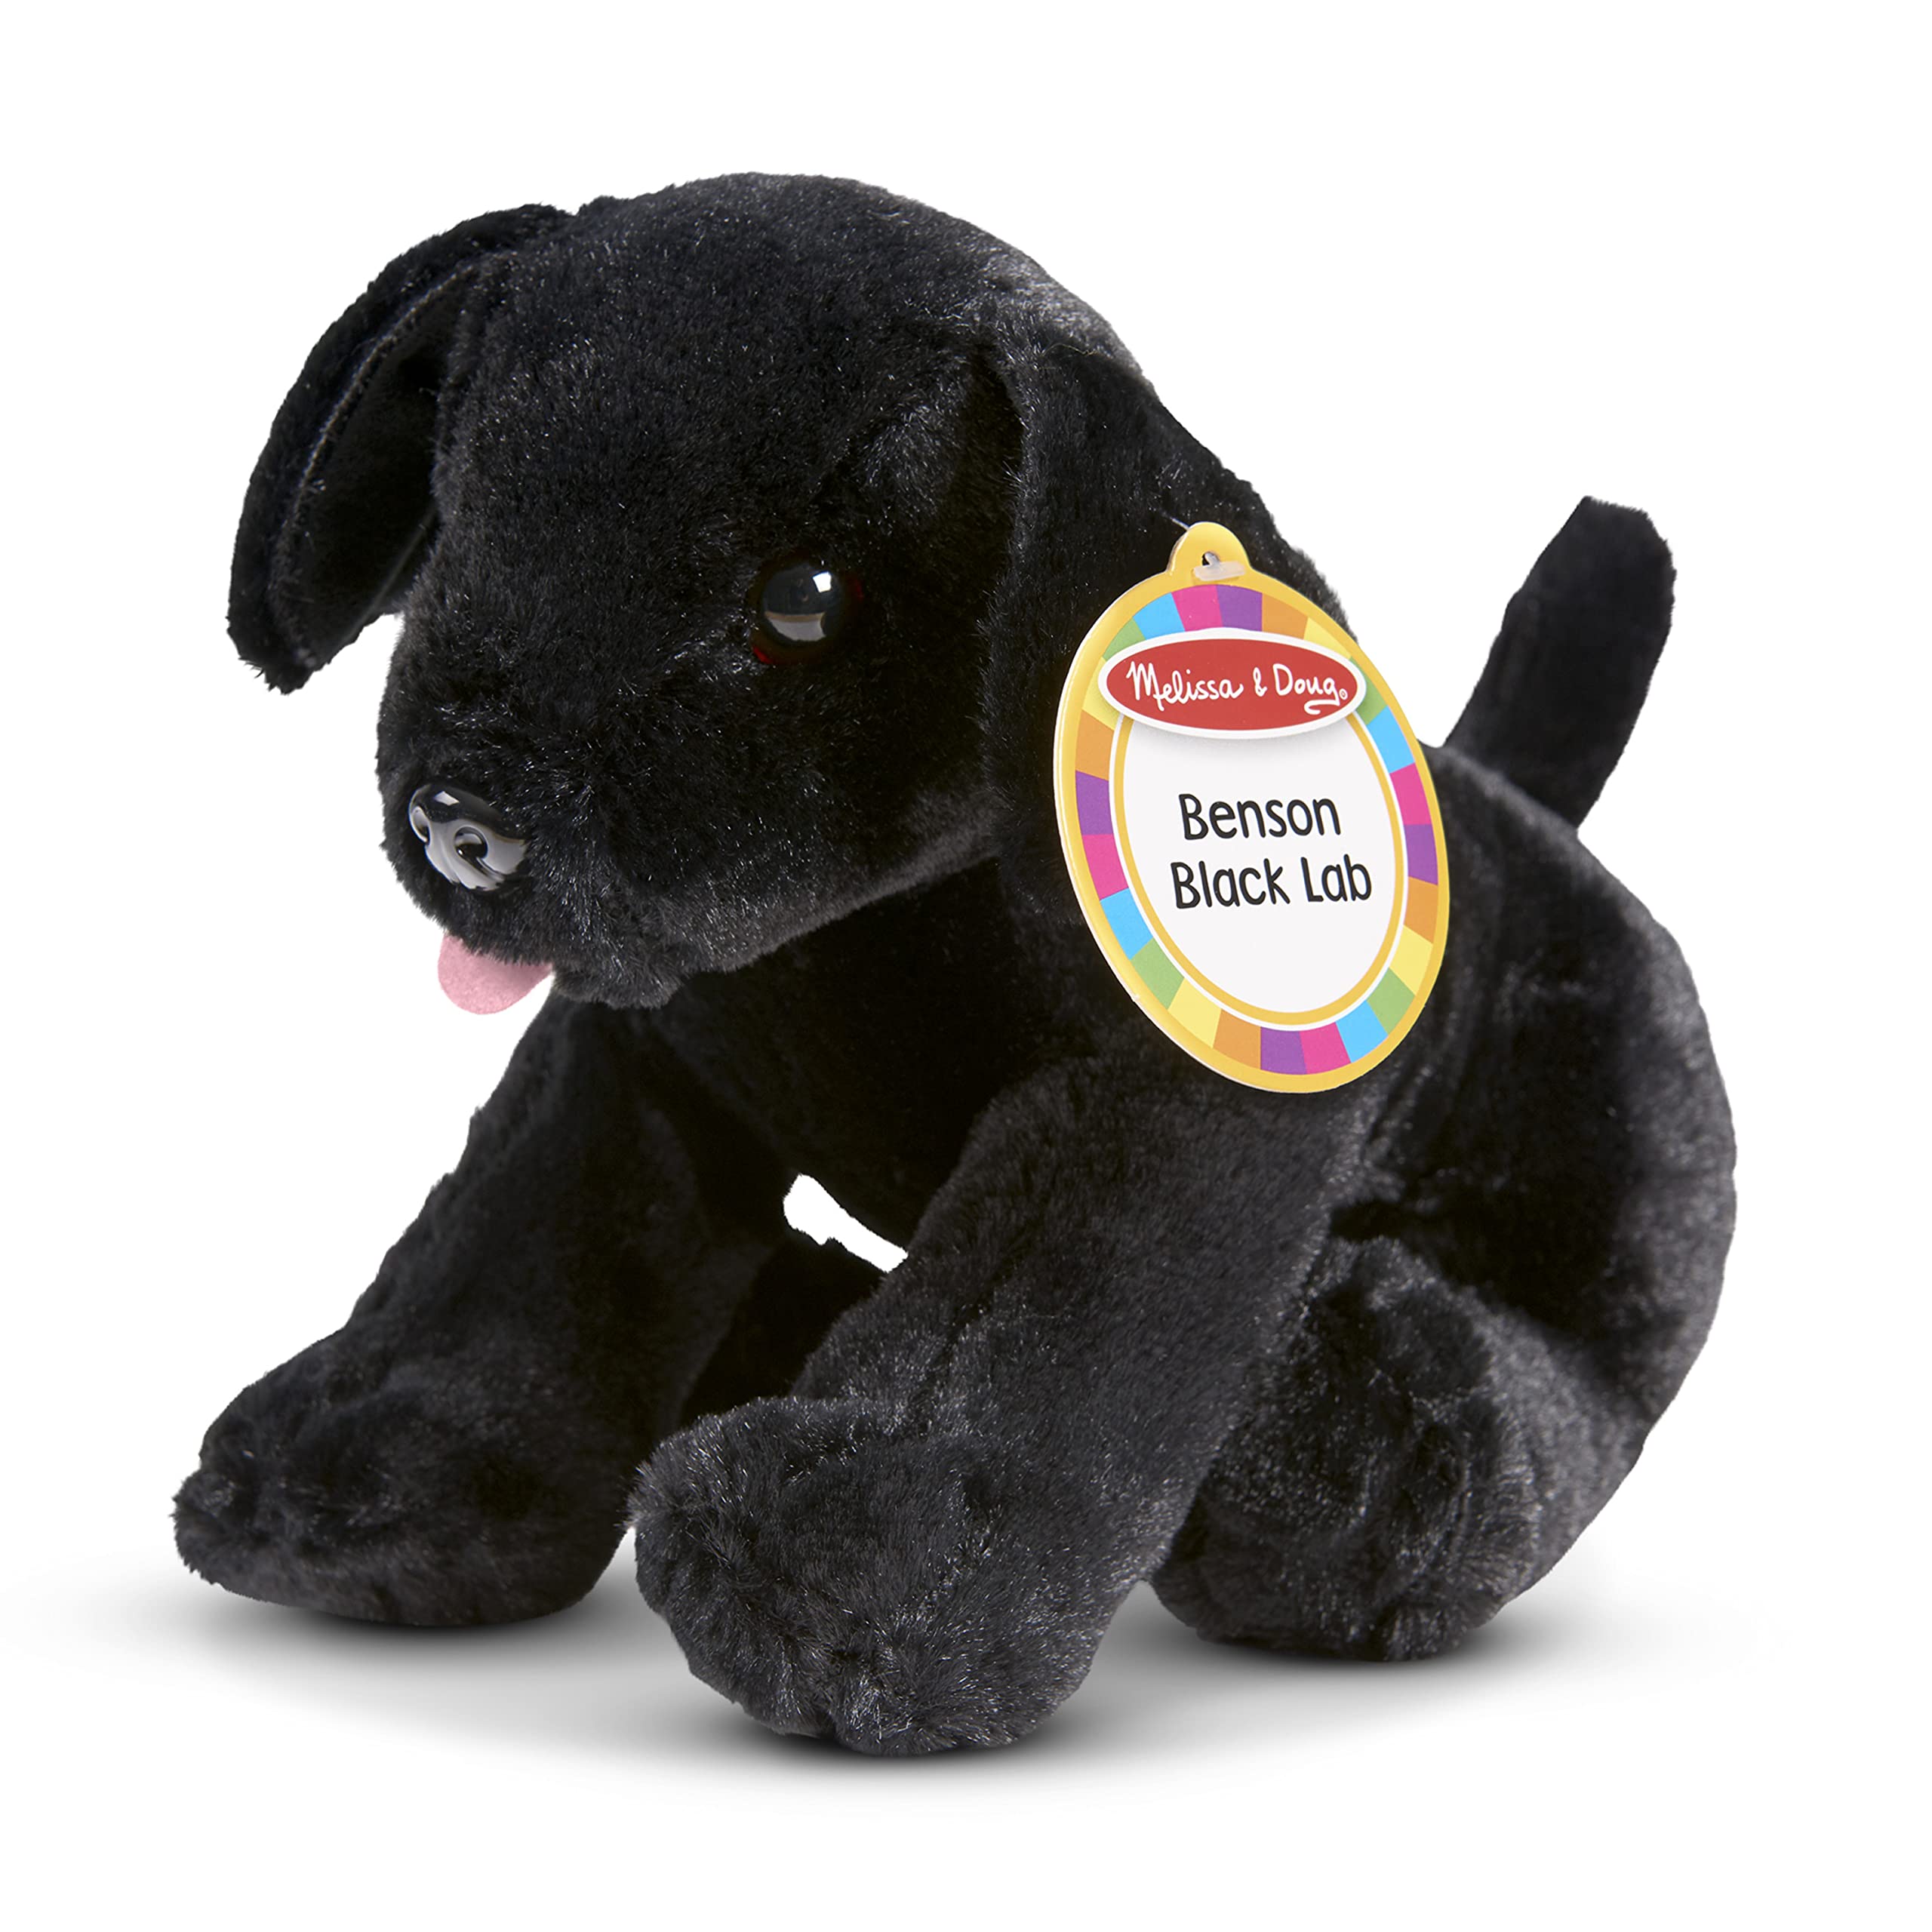 10" Melissa & Doug Benson Plush Black Lab Puppy Dog $7.84 + Free Shipping w/ Prime or on $35+